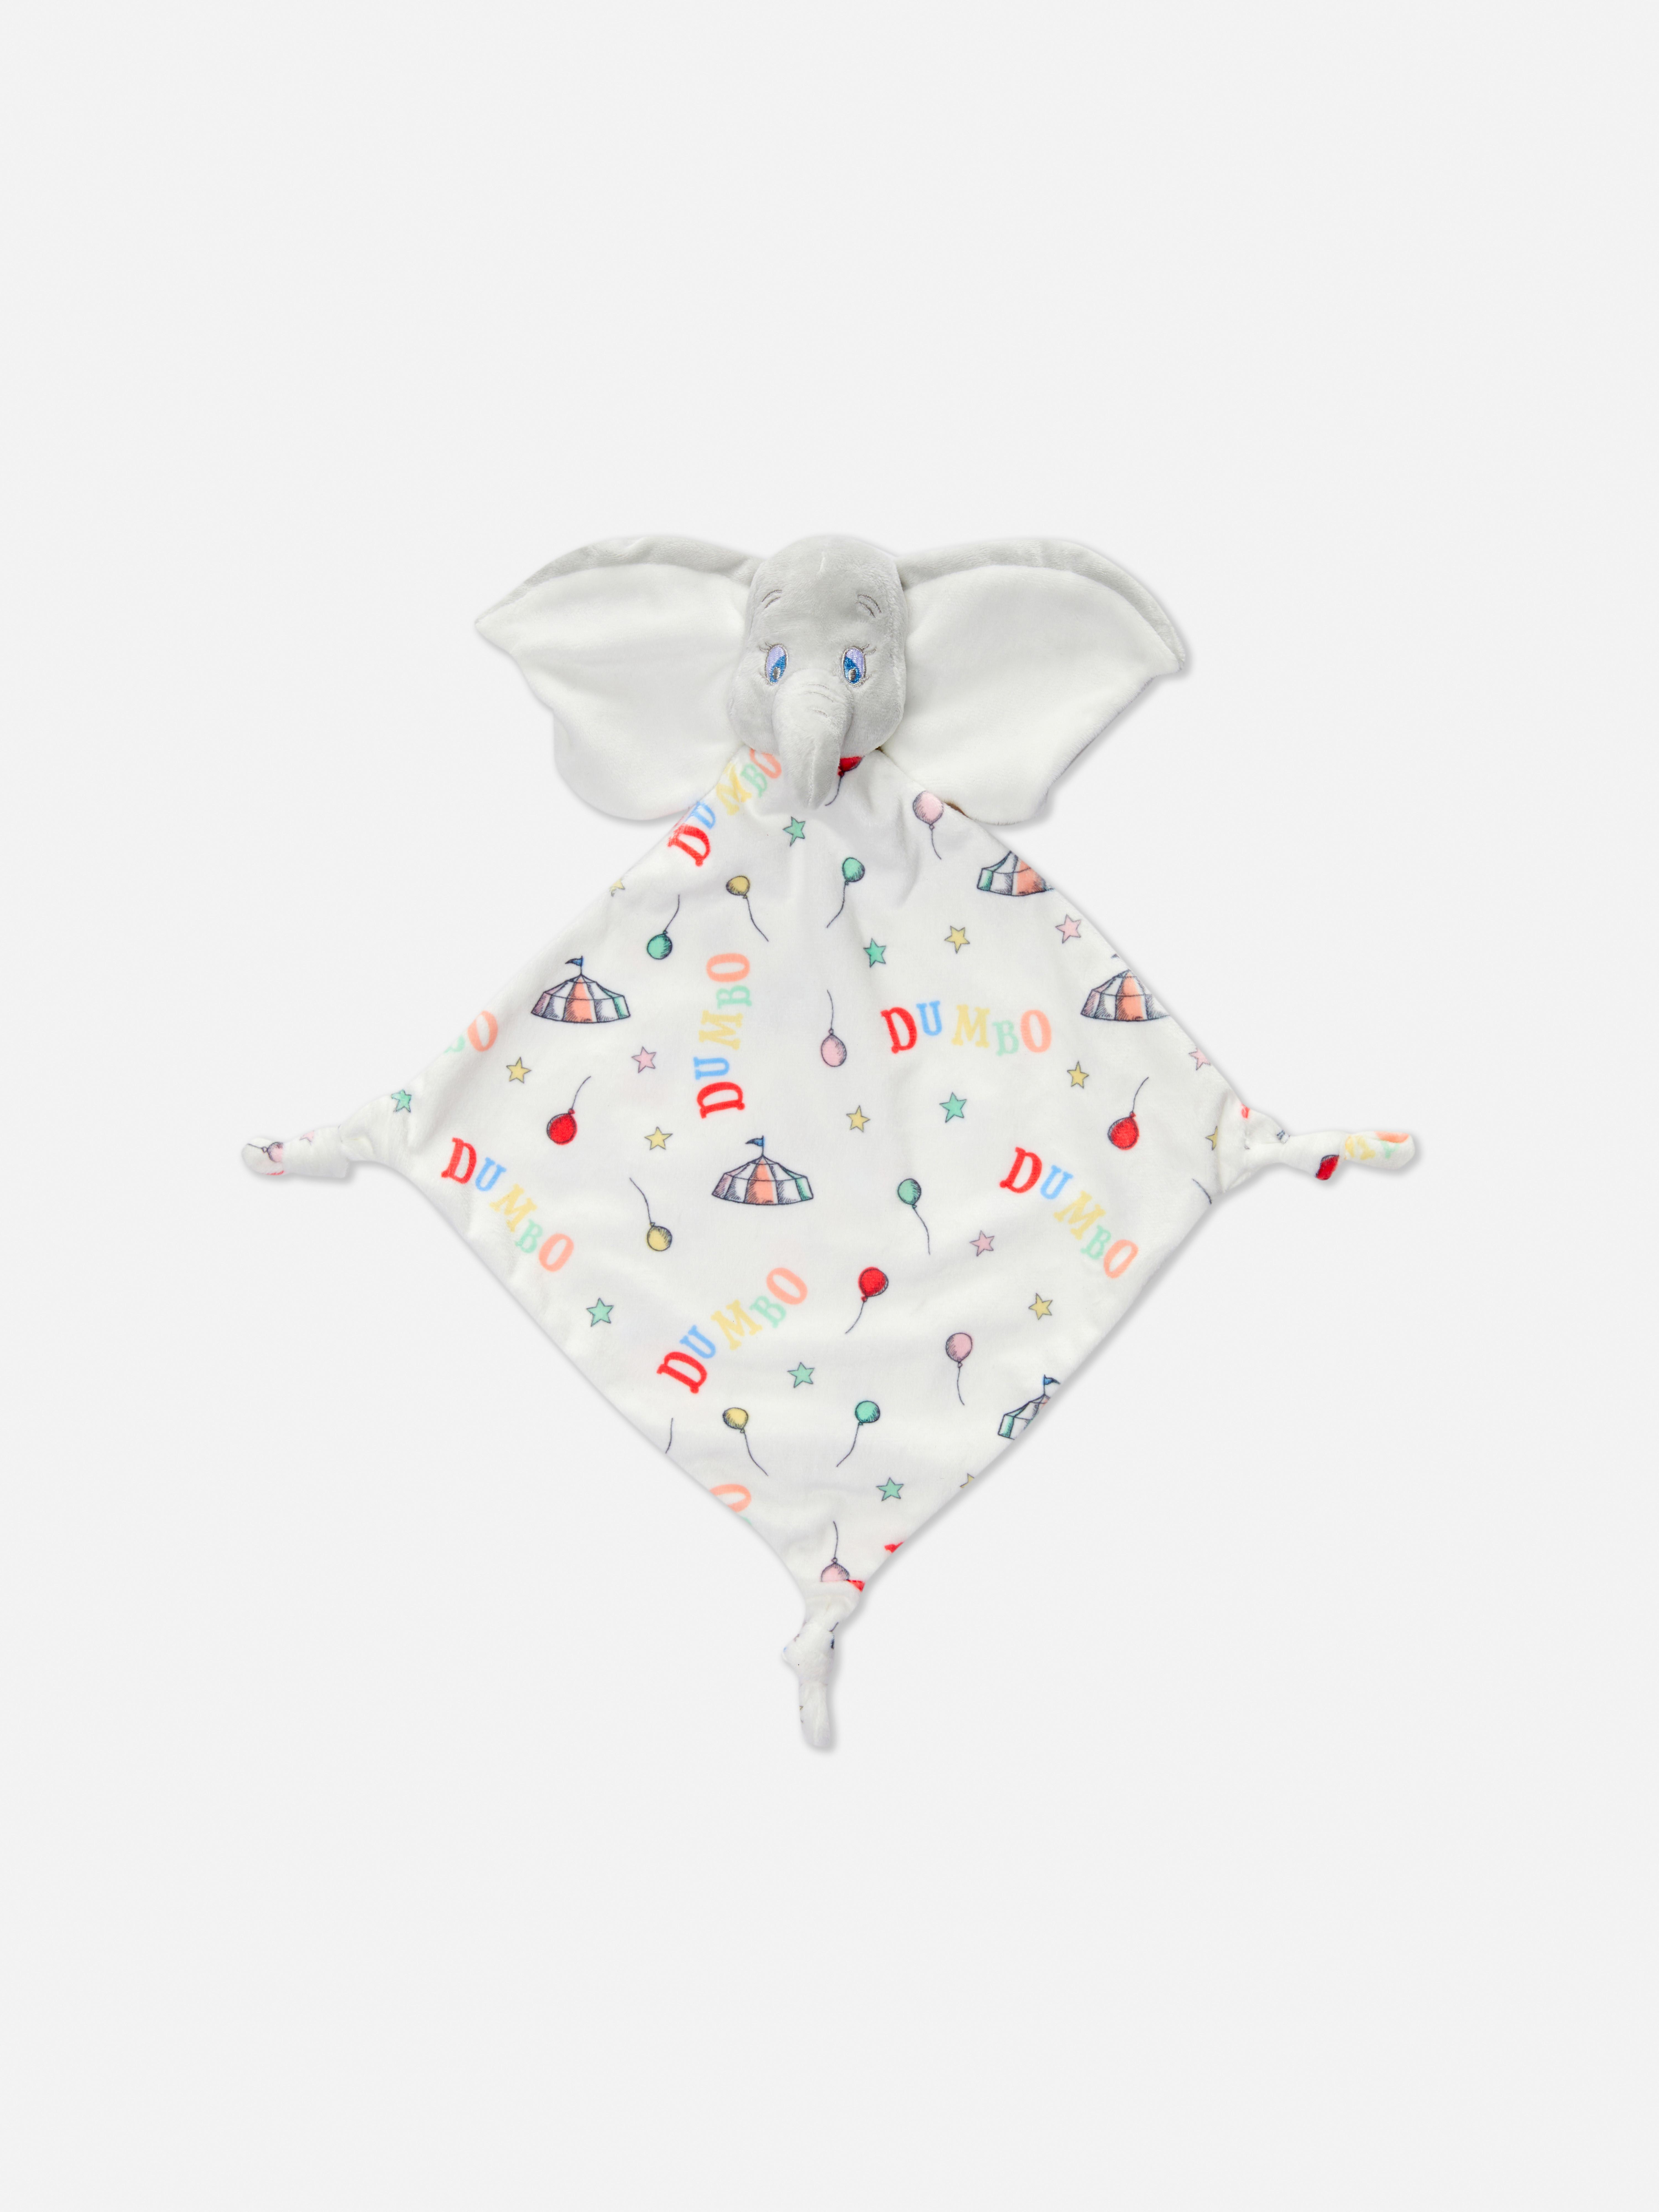 Disney’s Dumbo Comforter